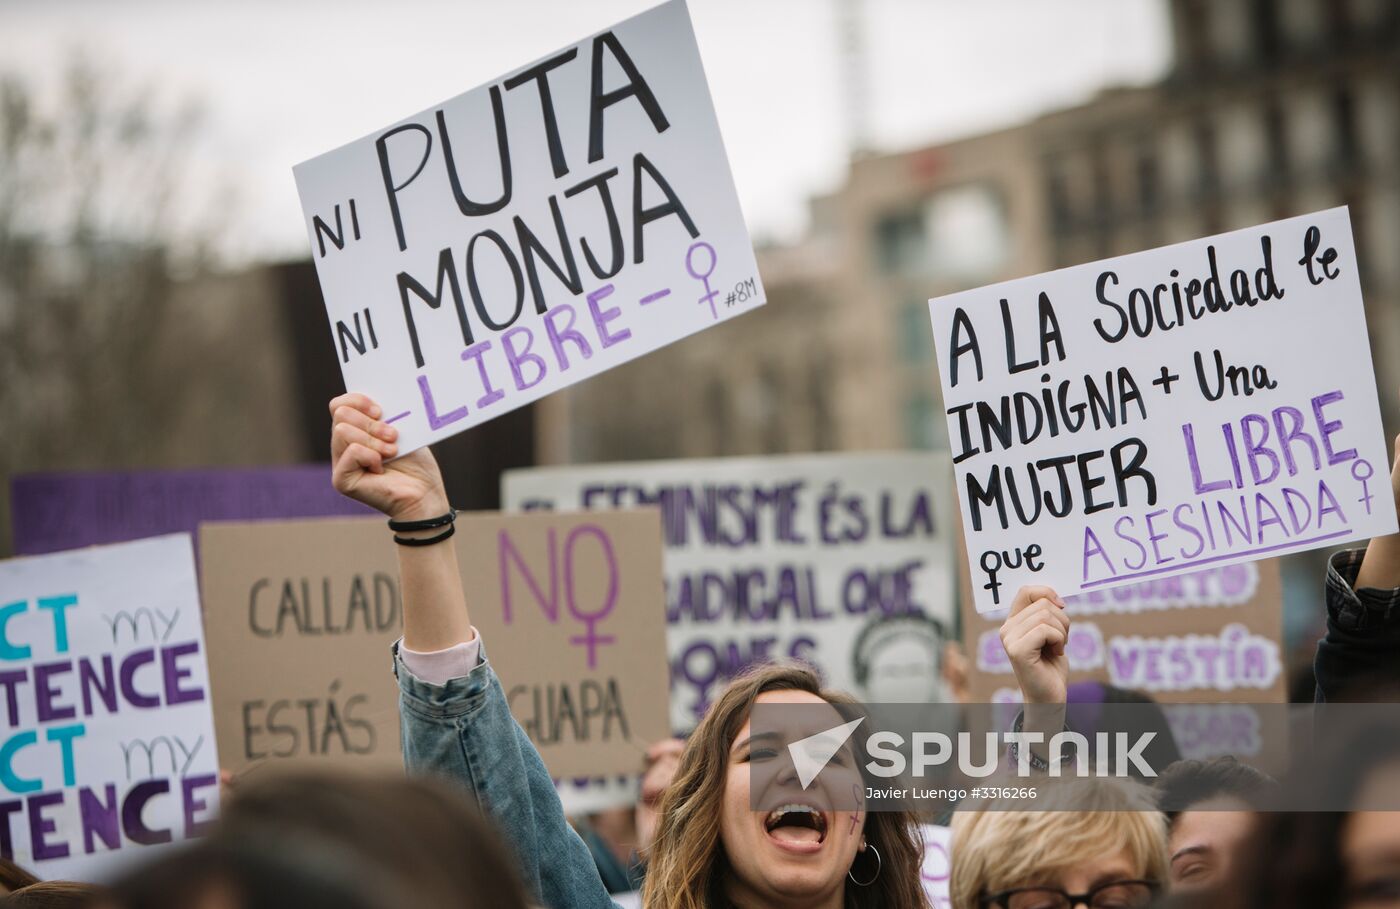 Women's protest in Barcelona